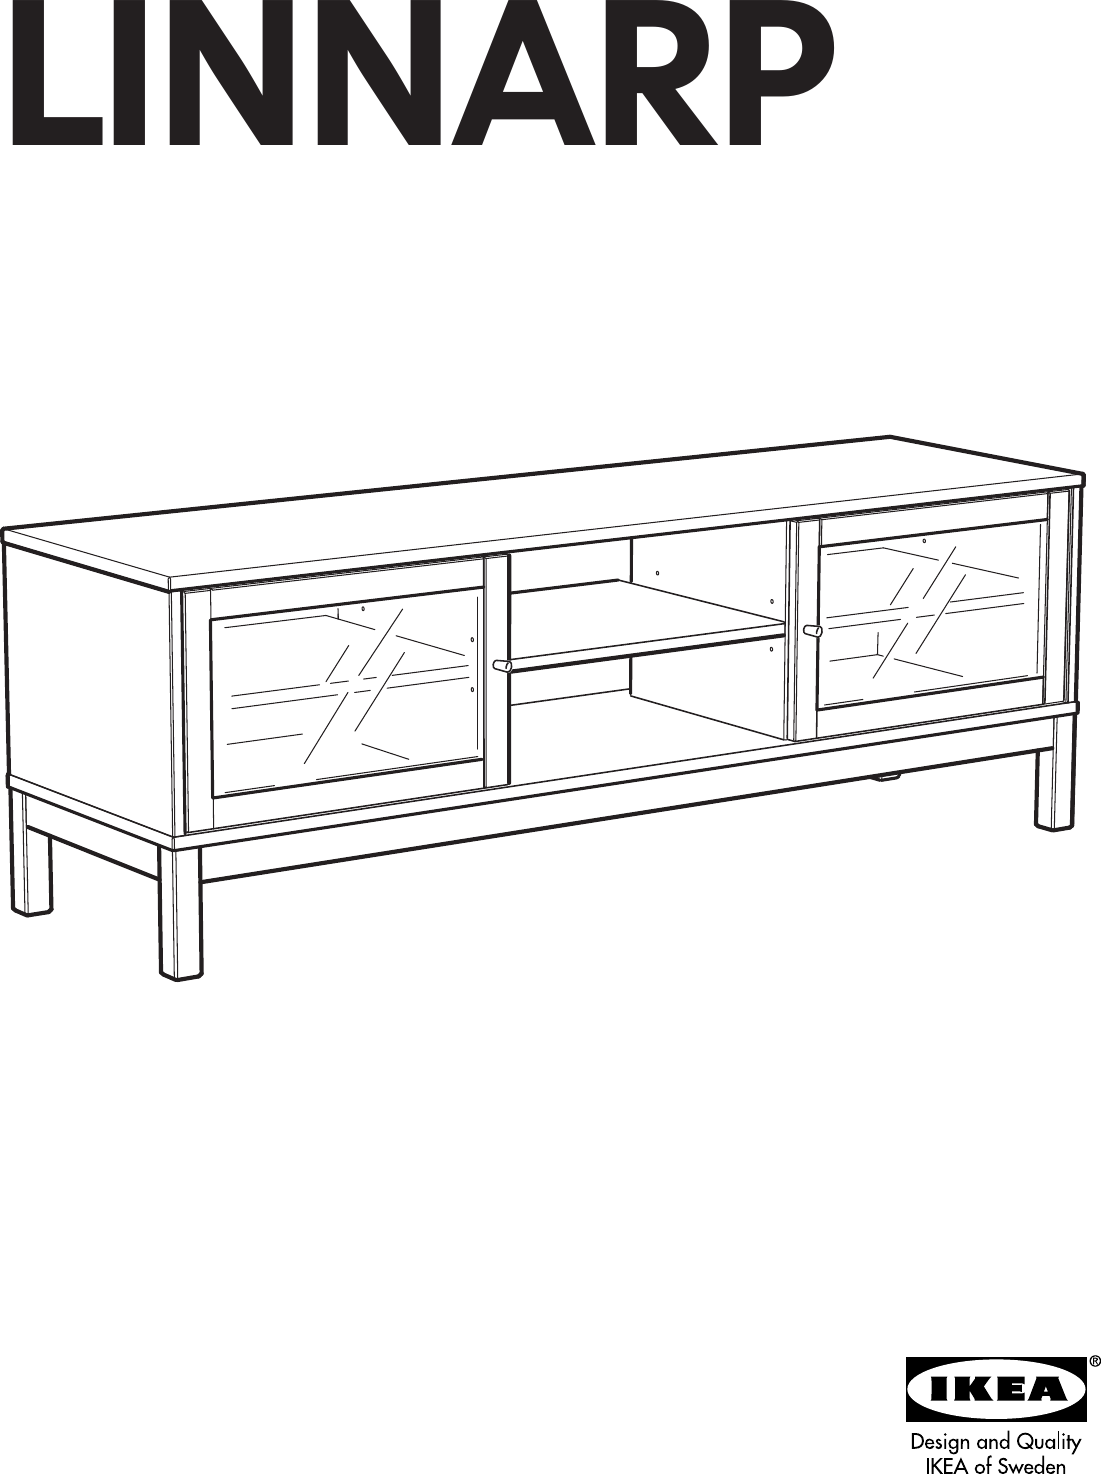 Ikea Linnarp Tv Bench Assembly Instruction